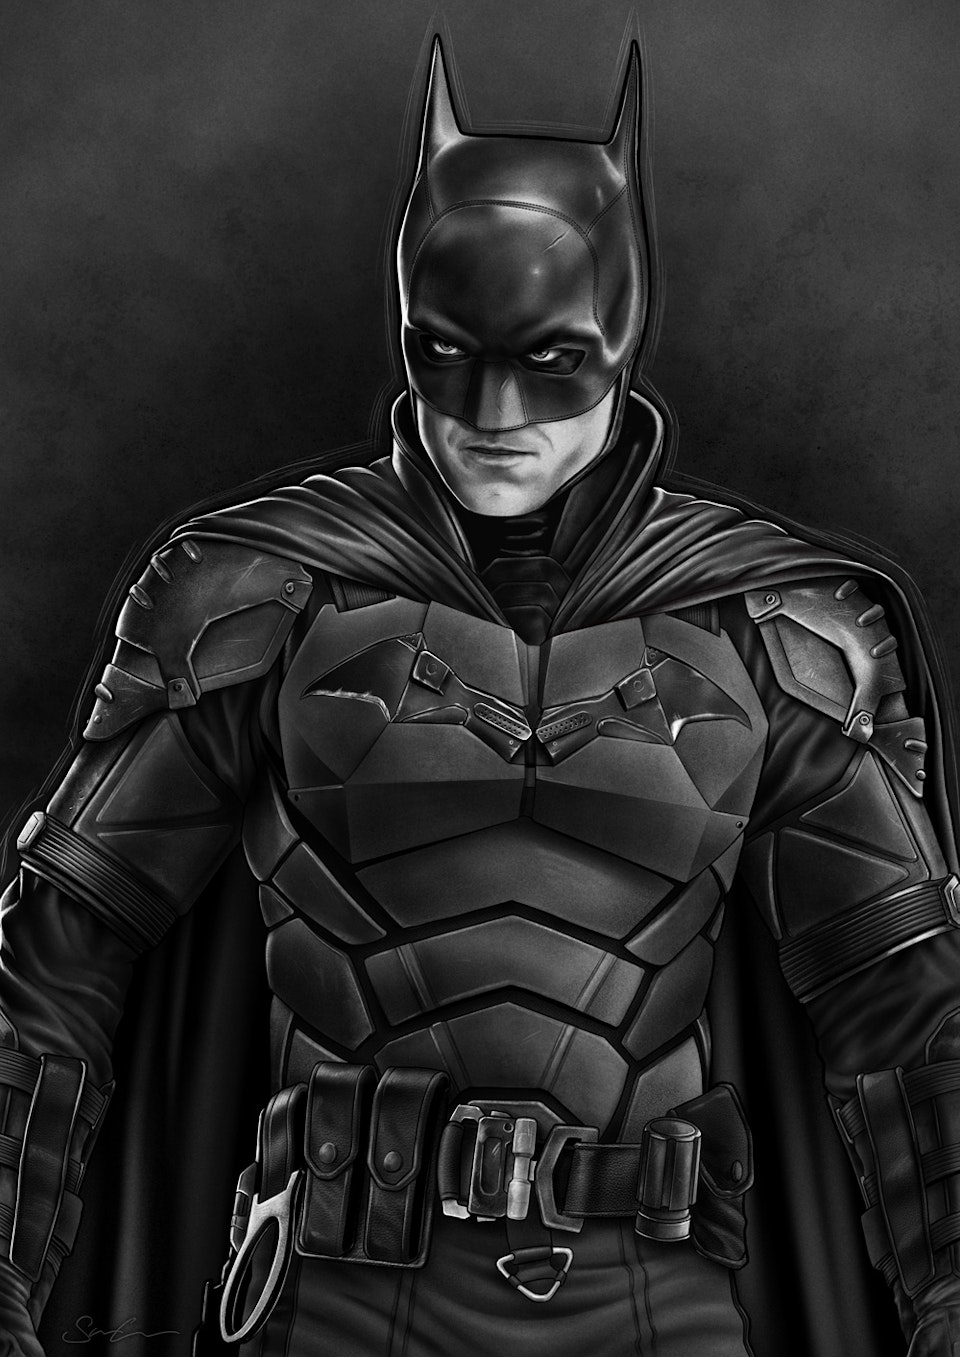 Batman Illustrations - The Batman

Original greyscale drawing, made in Procreate.